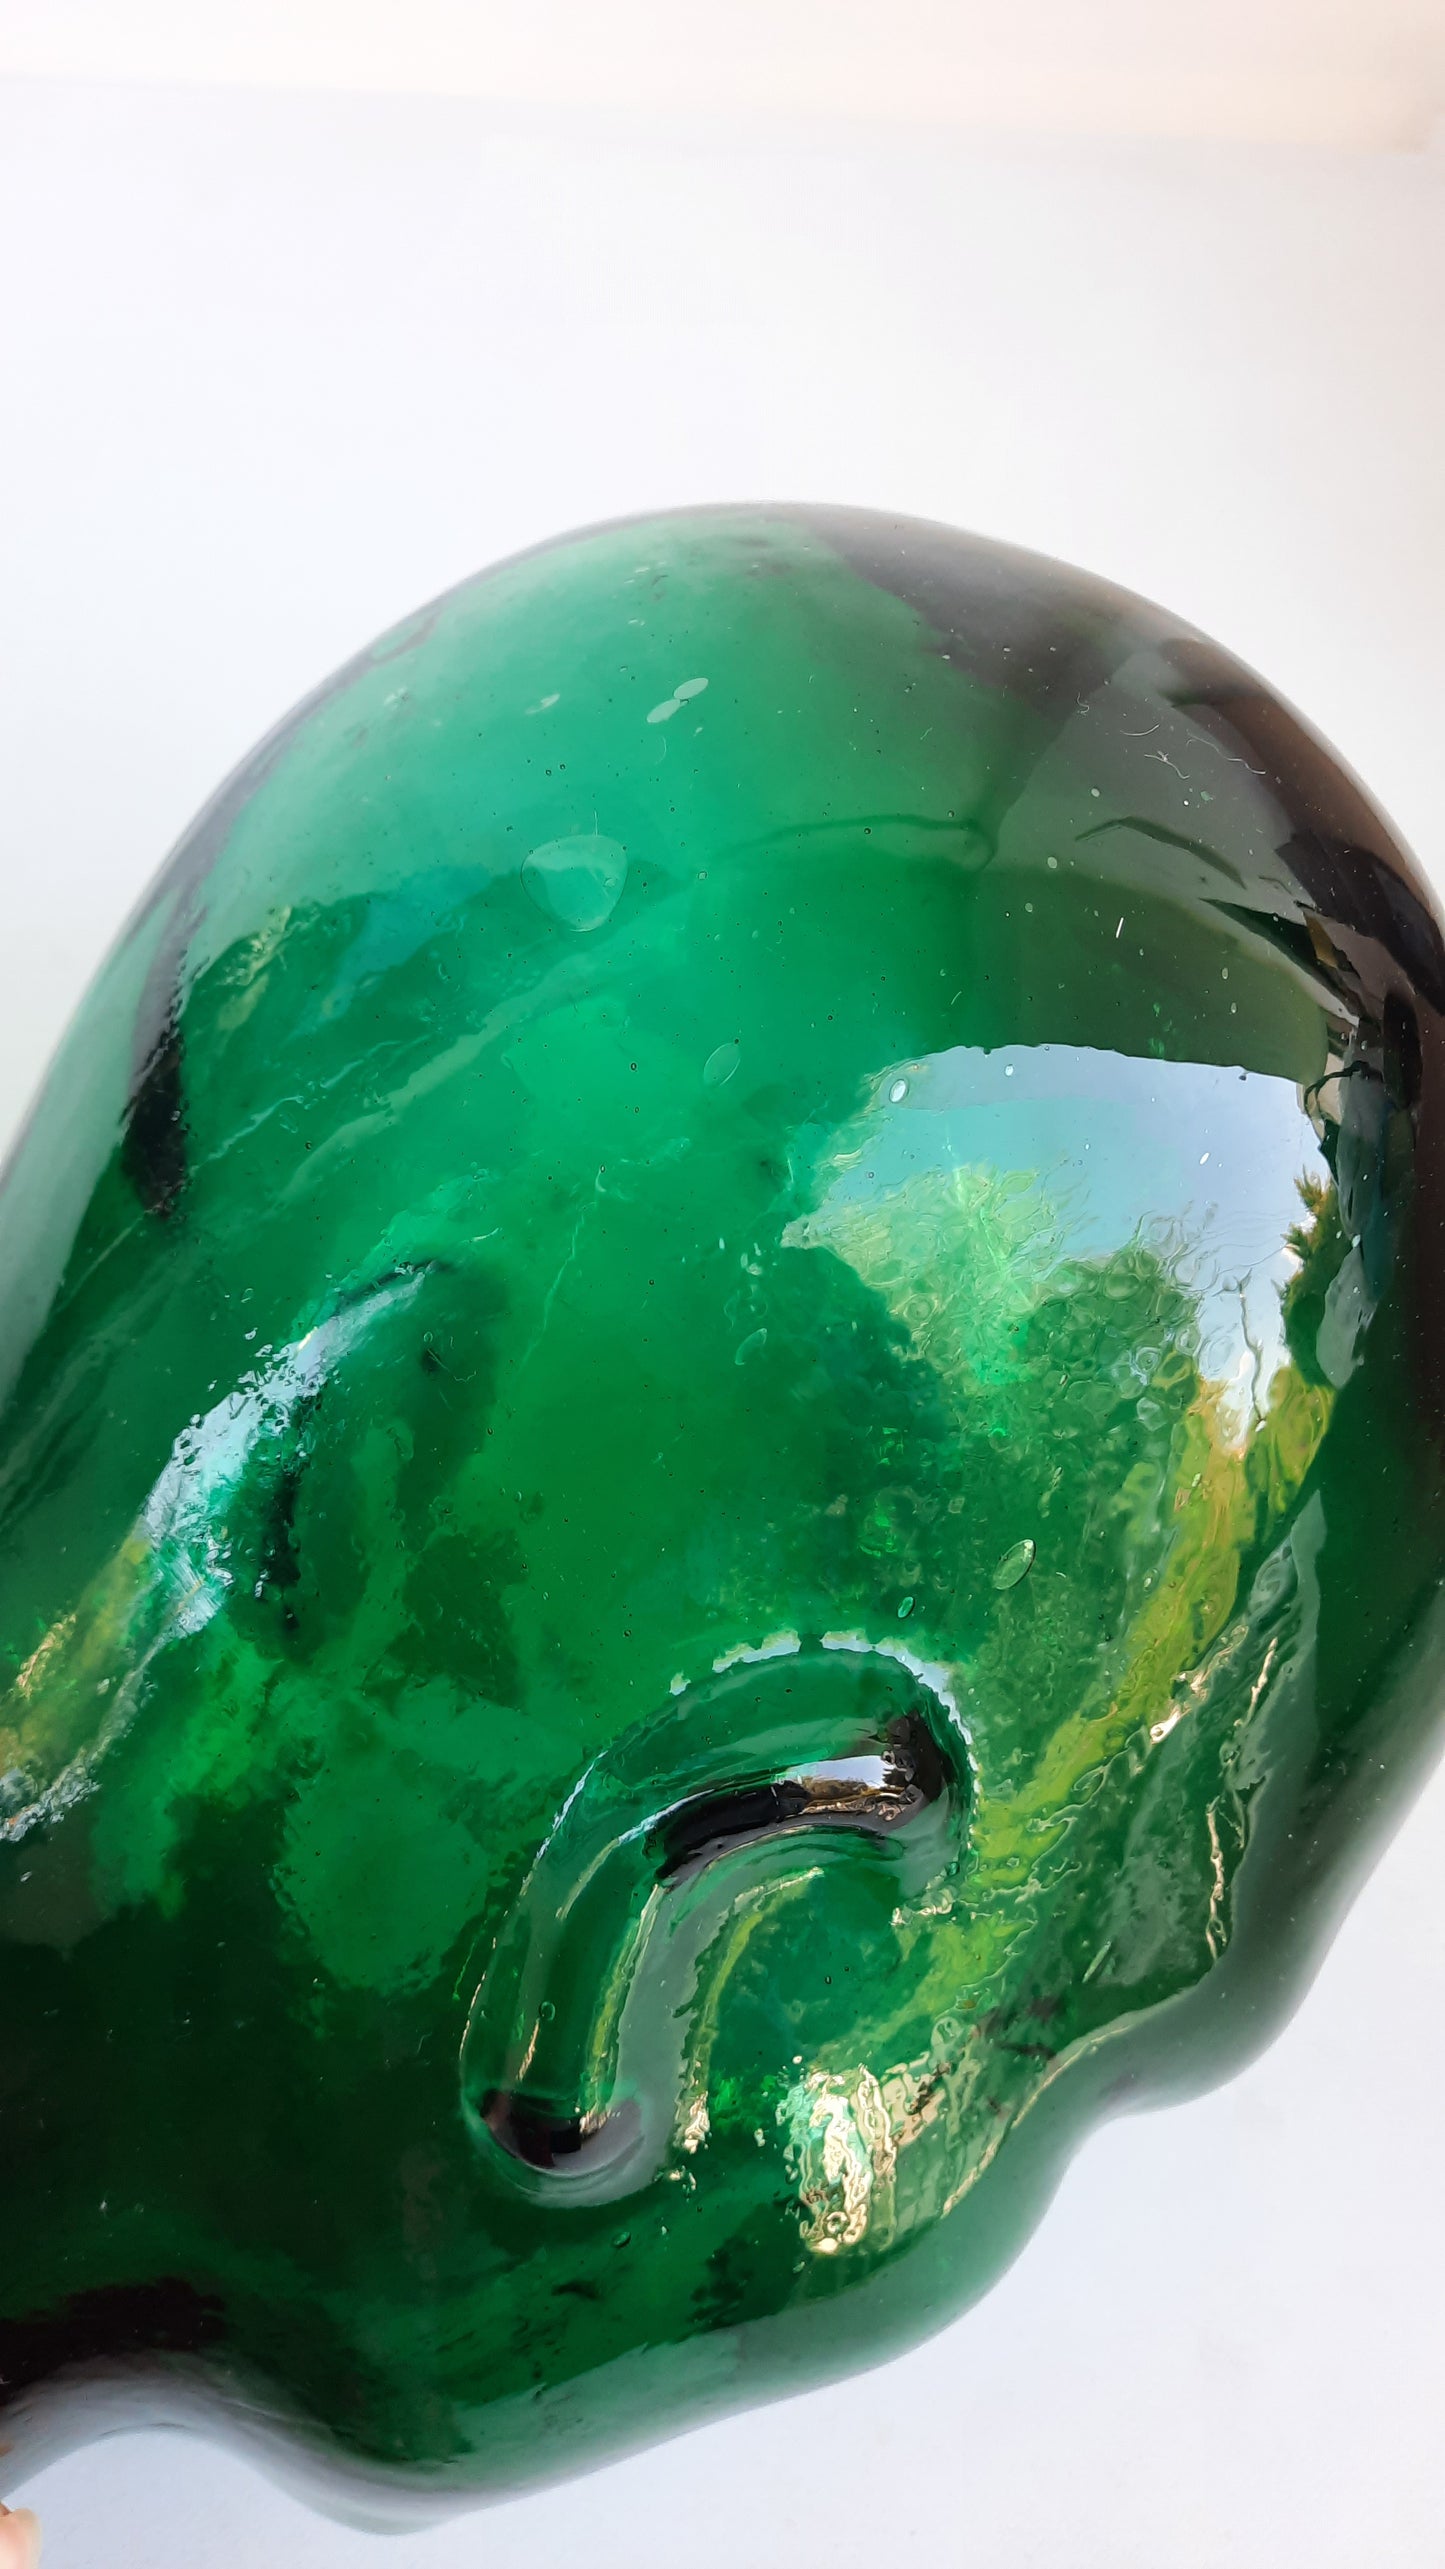 Vintage Green Glass Mannequin Head